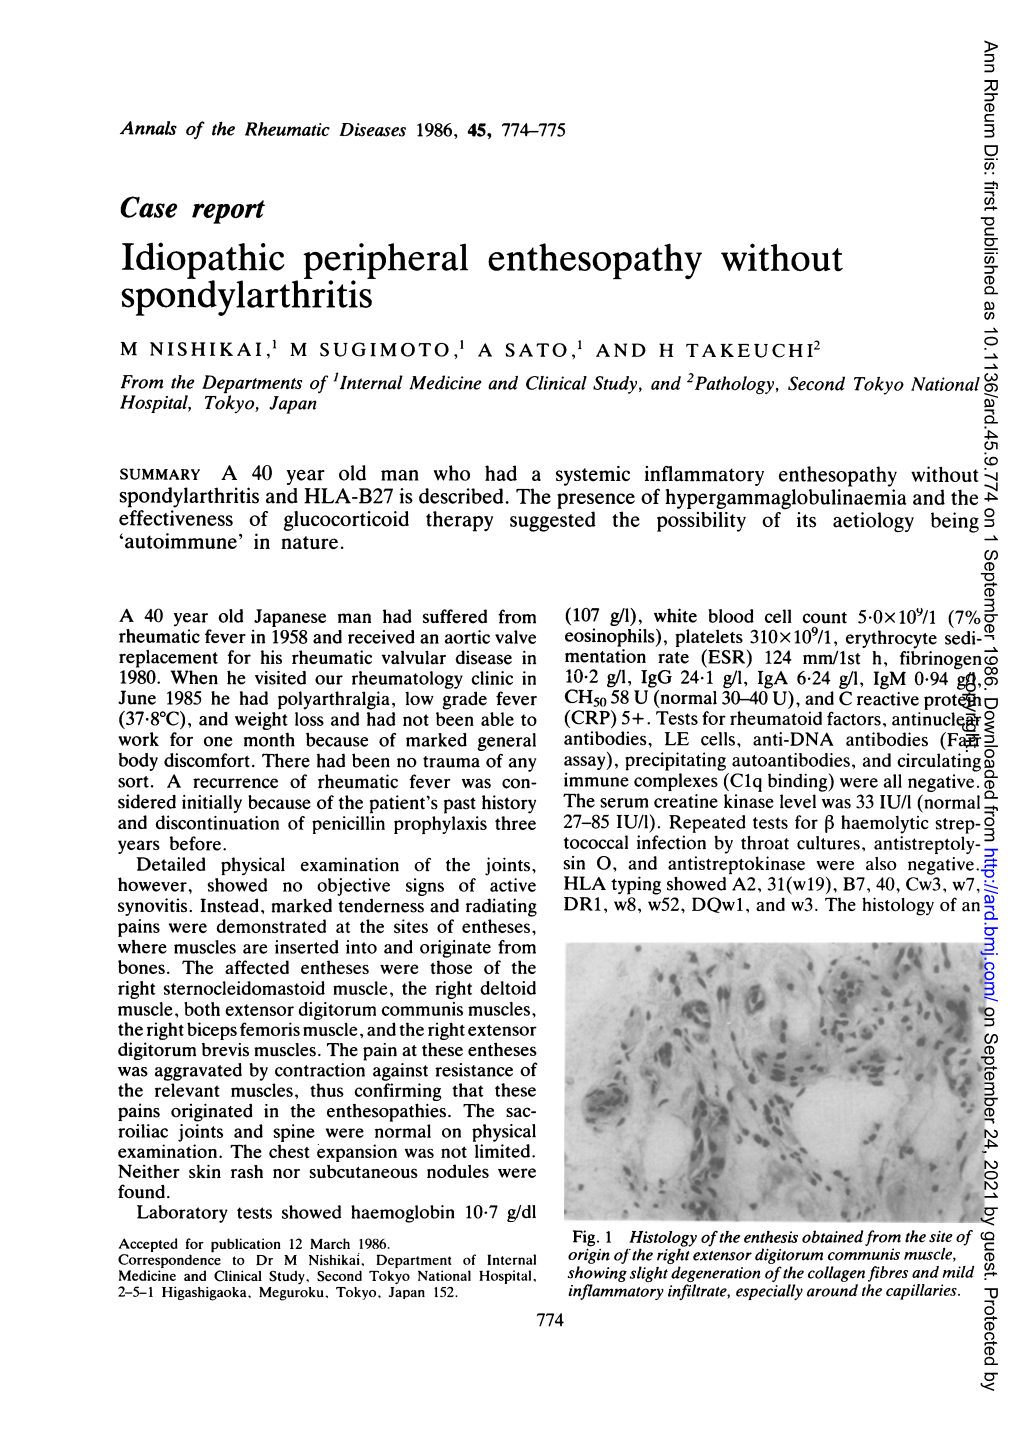 Idiopathic Peripheral Enthesopathy Without Spondylarthritis